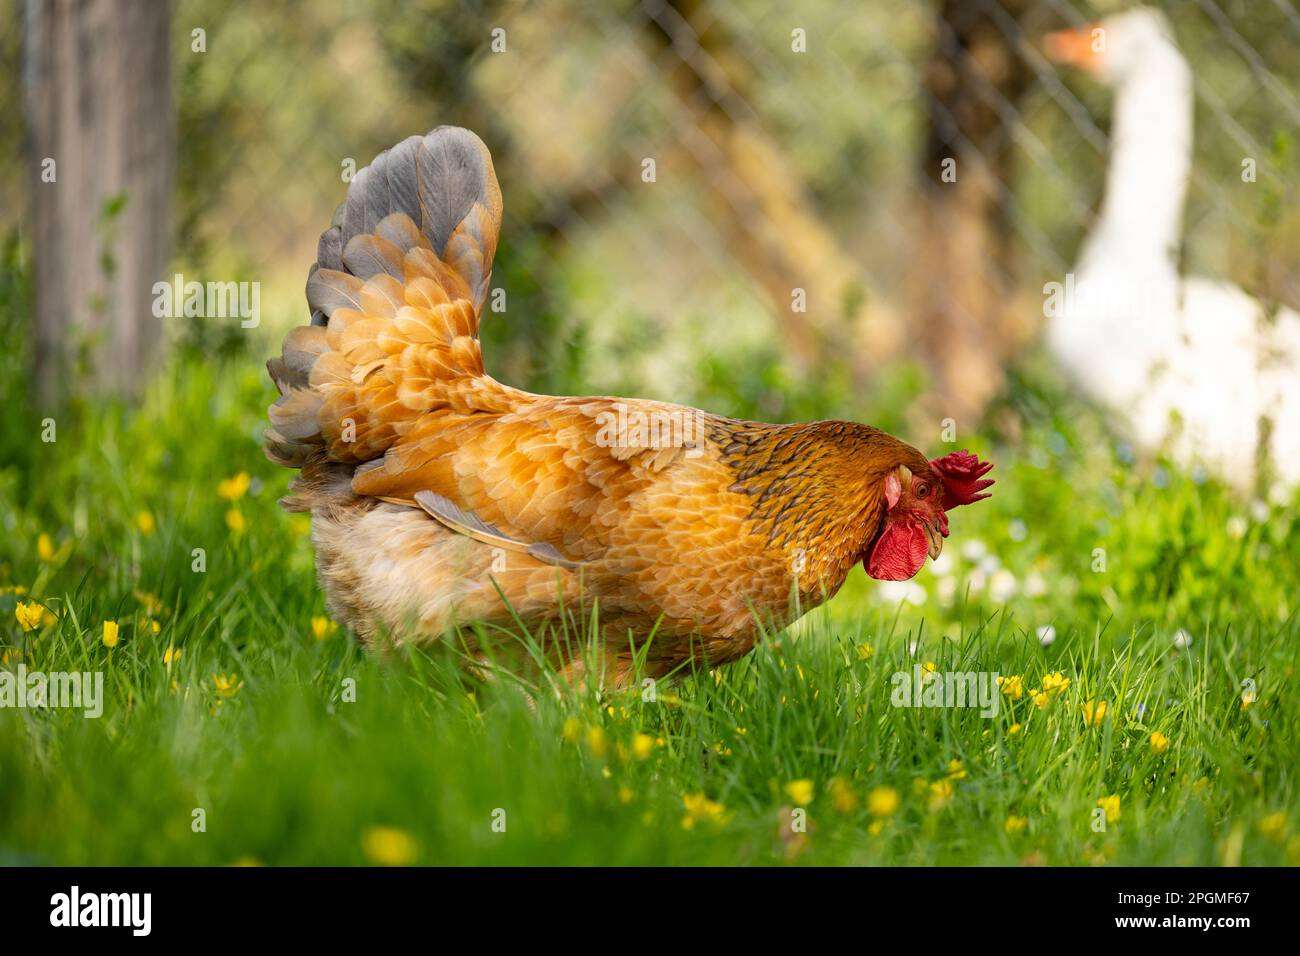 Razza Empordanesa (gallina de raca empordanesa) gallina che vagano liberamente e si nutrono nell'erba (Gallus gallus domesticus). El Baix Empordà, Girona. Foto Stock